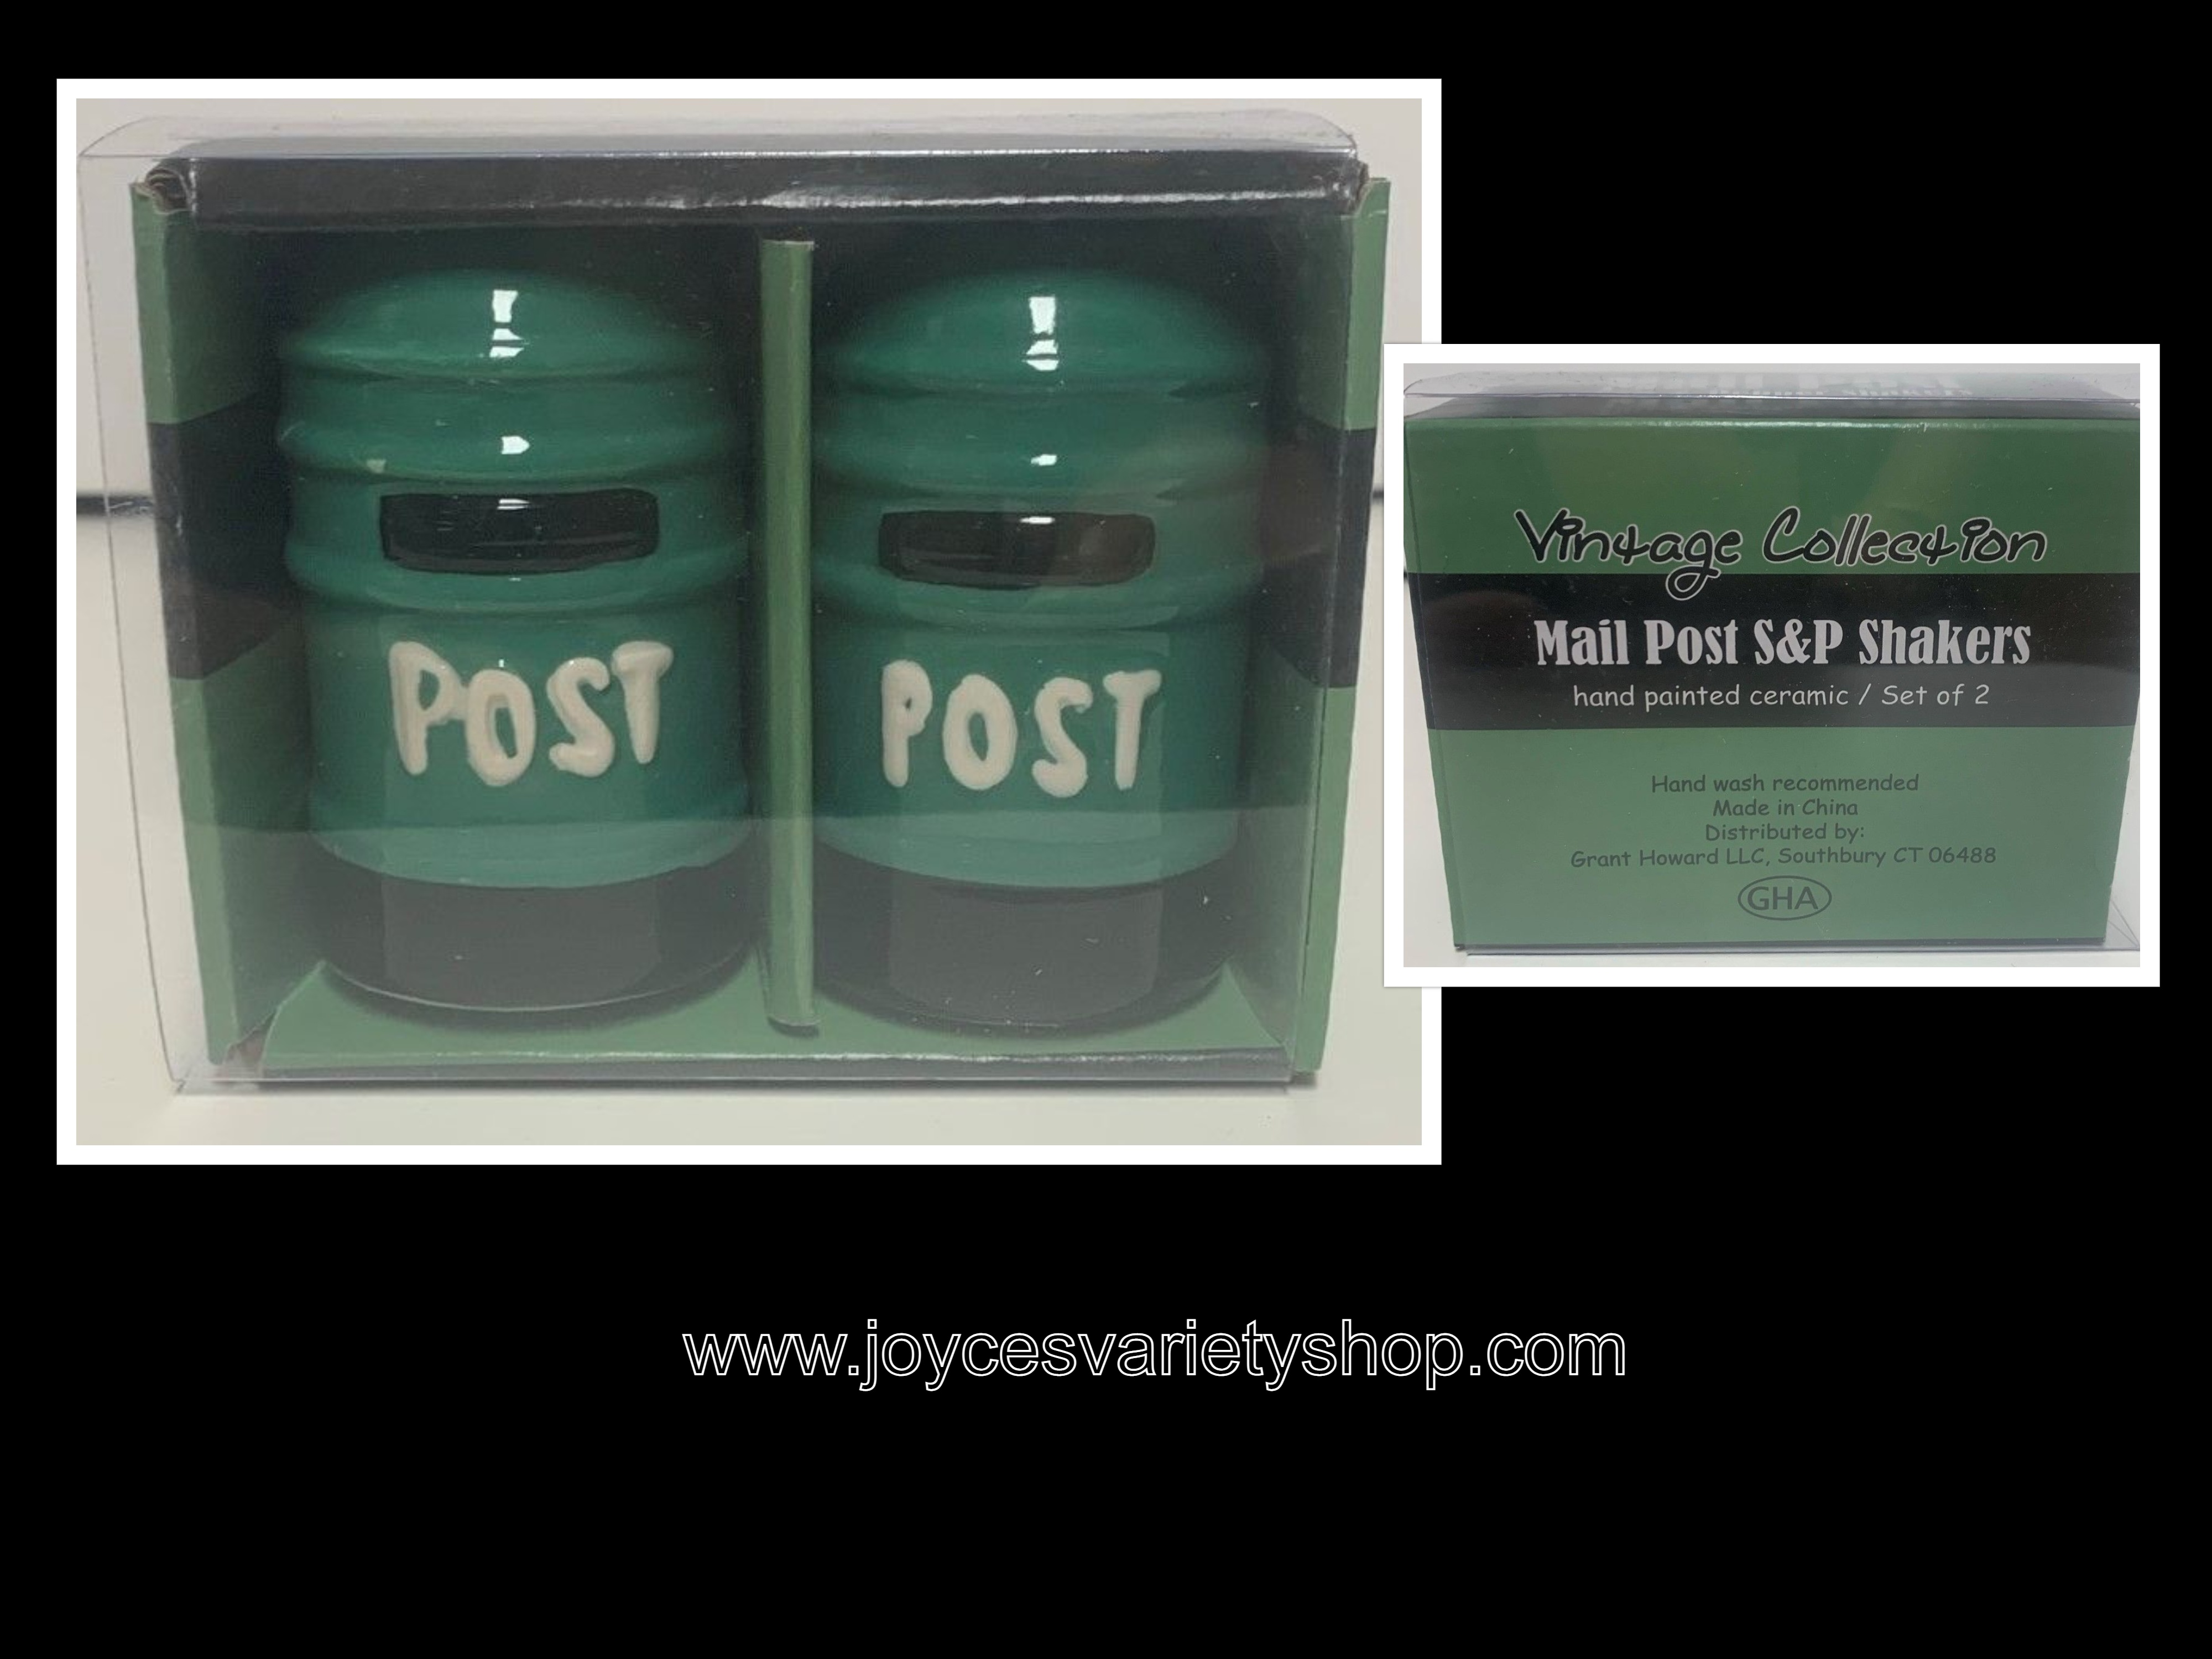 Vintage Mail Post Salt & Pepper Shakers Hand Painted Ceramics Set